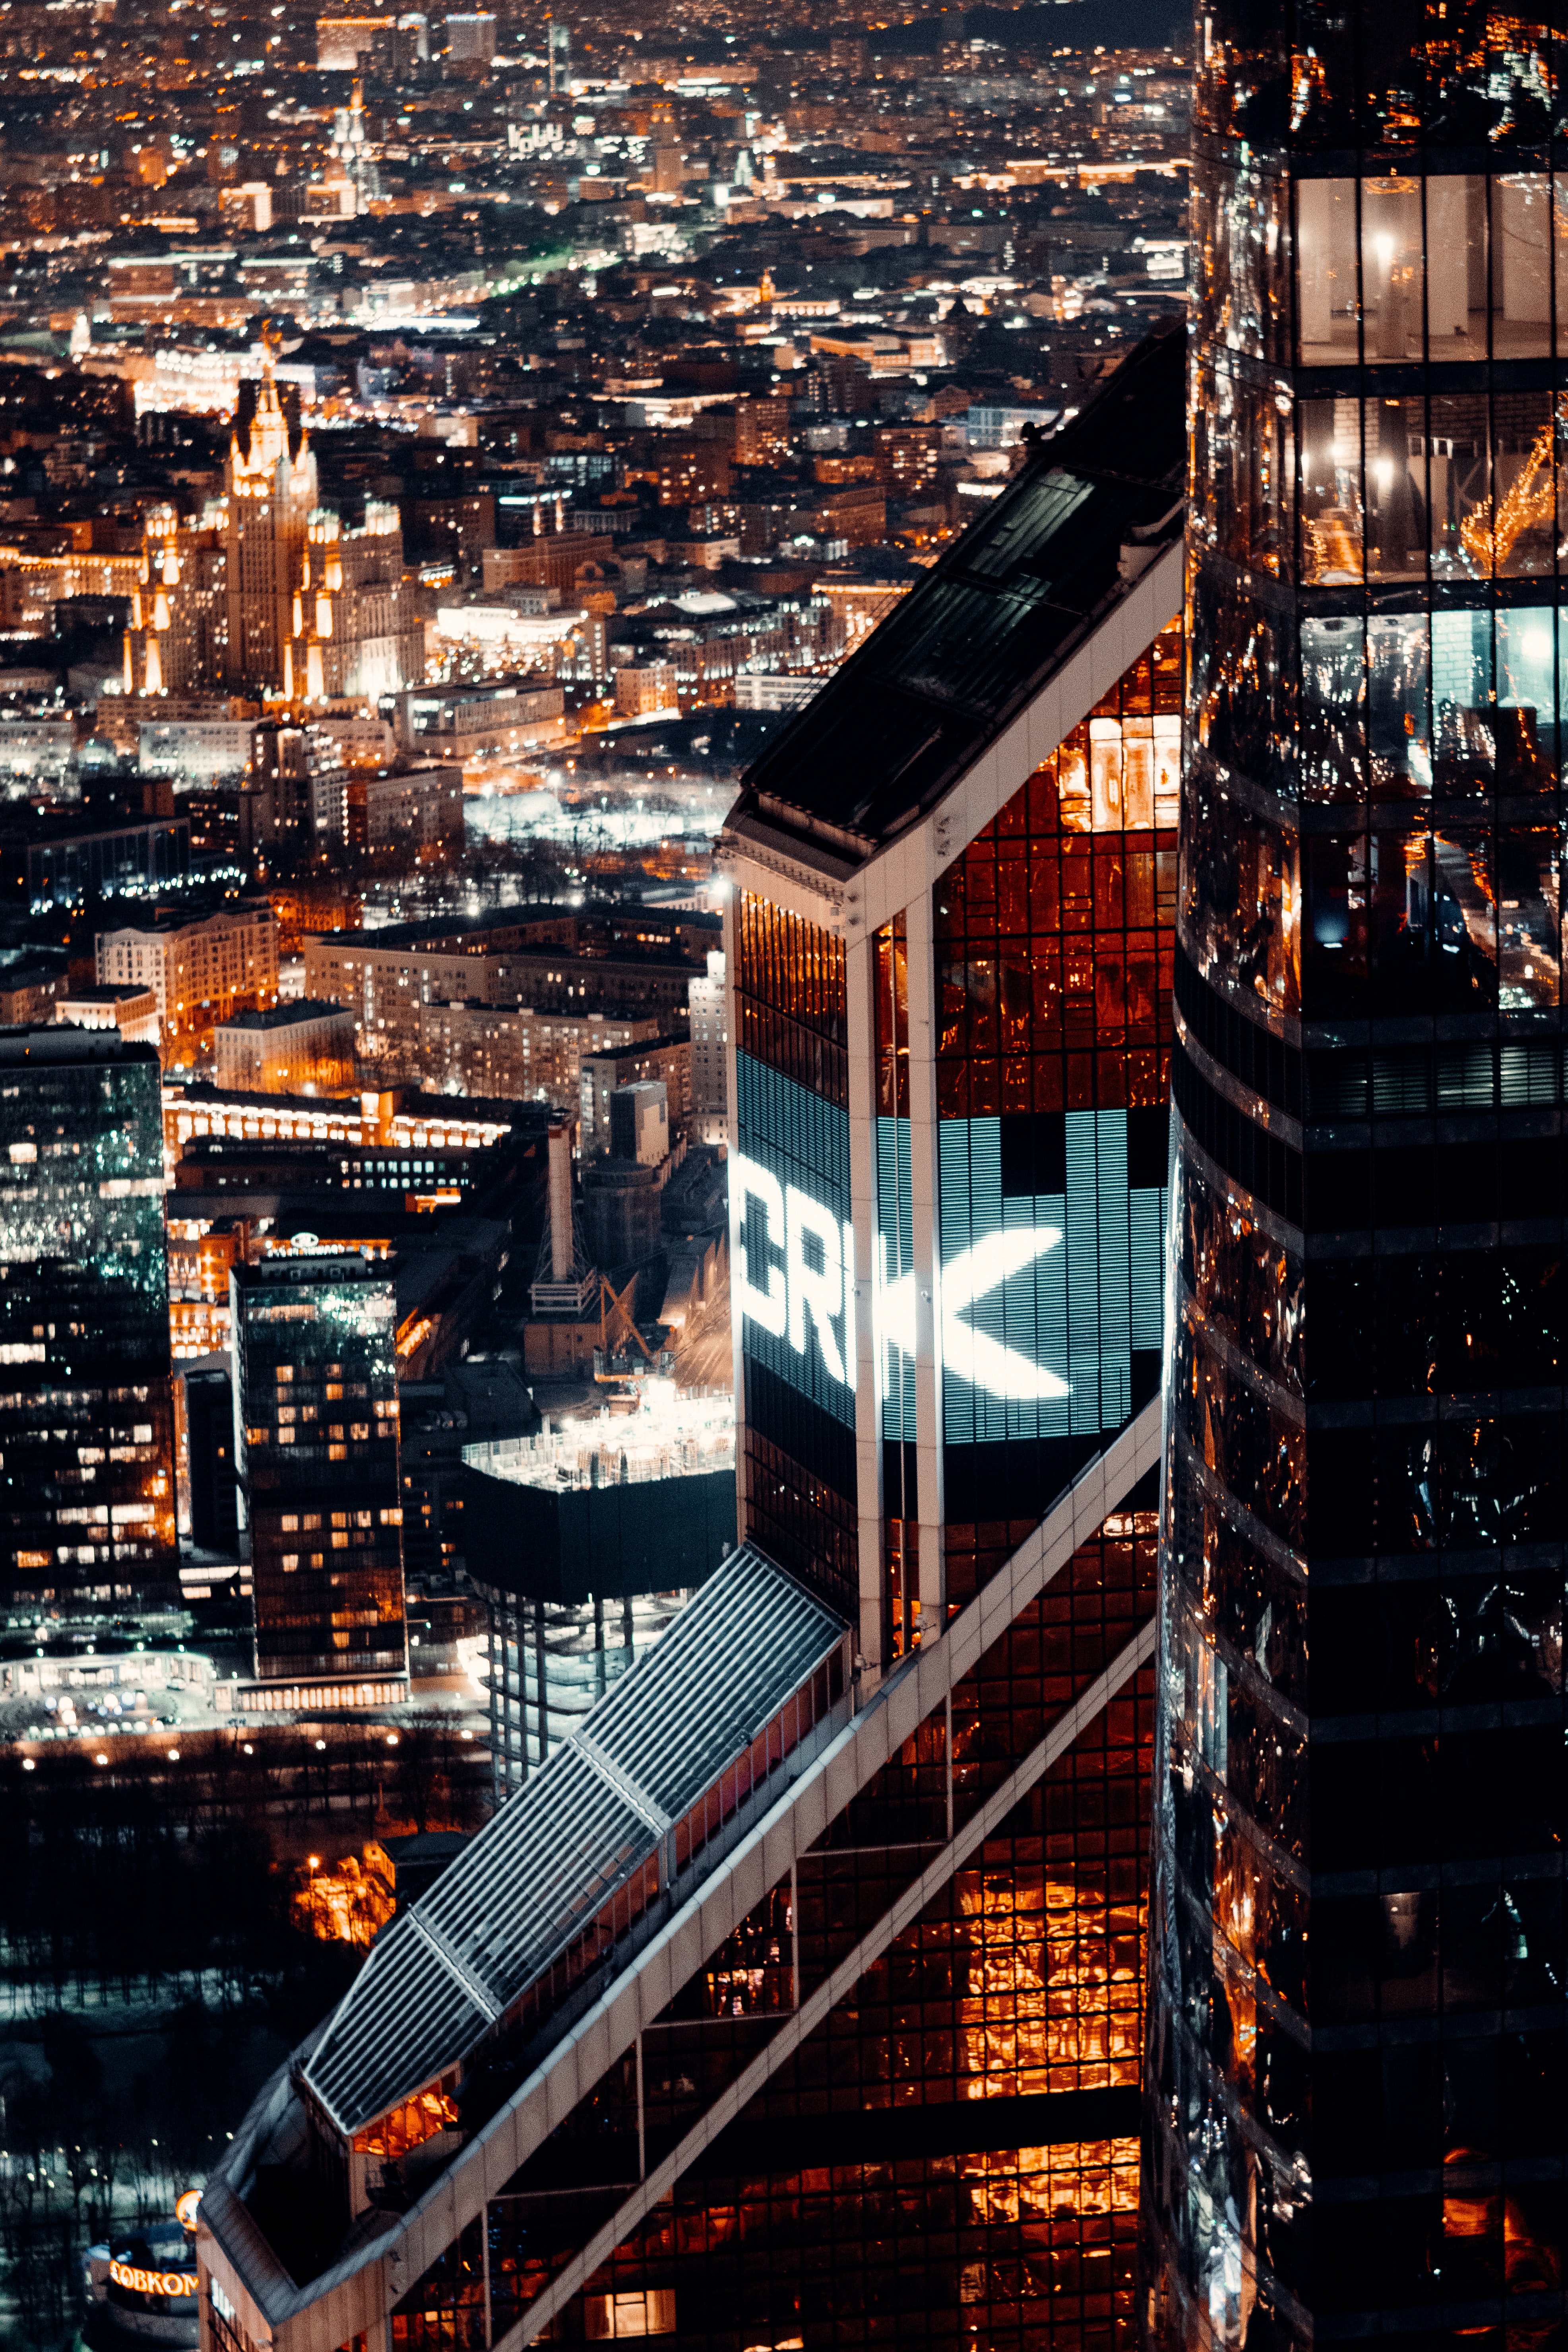 desktop Images megalopolis, cities, architecture, moskow, city, building, view from above, megapolis, russia